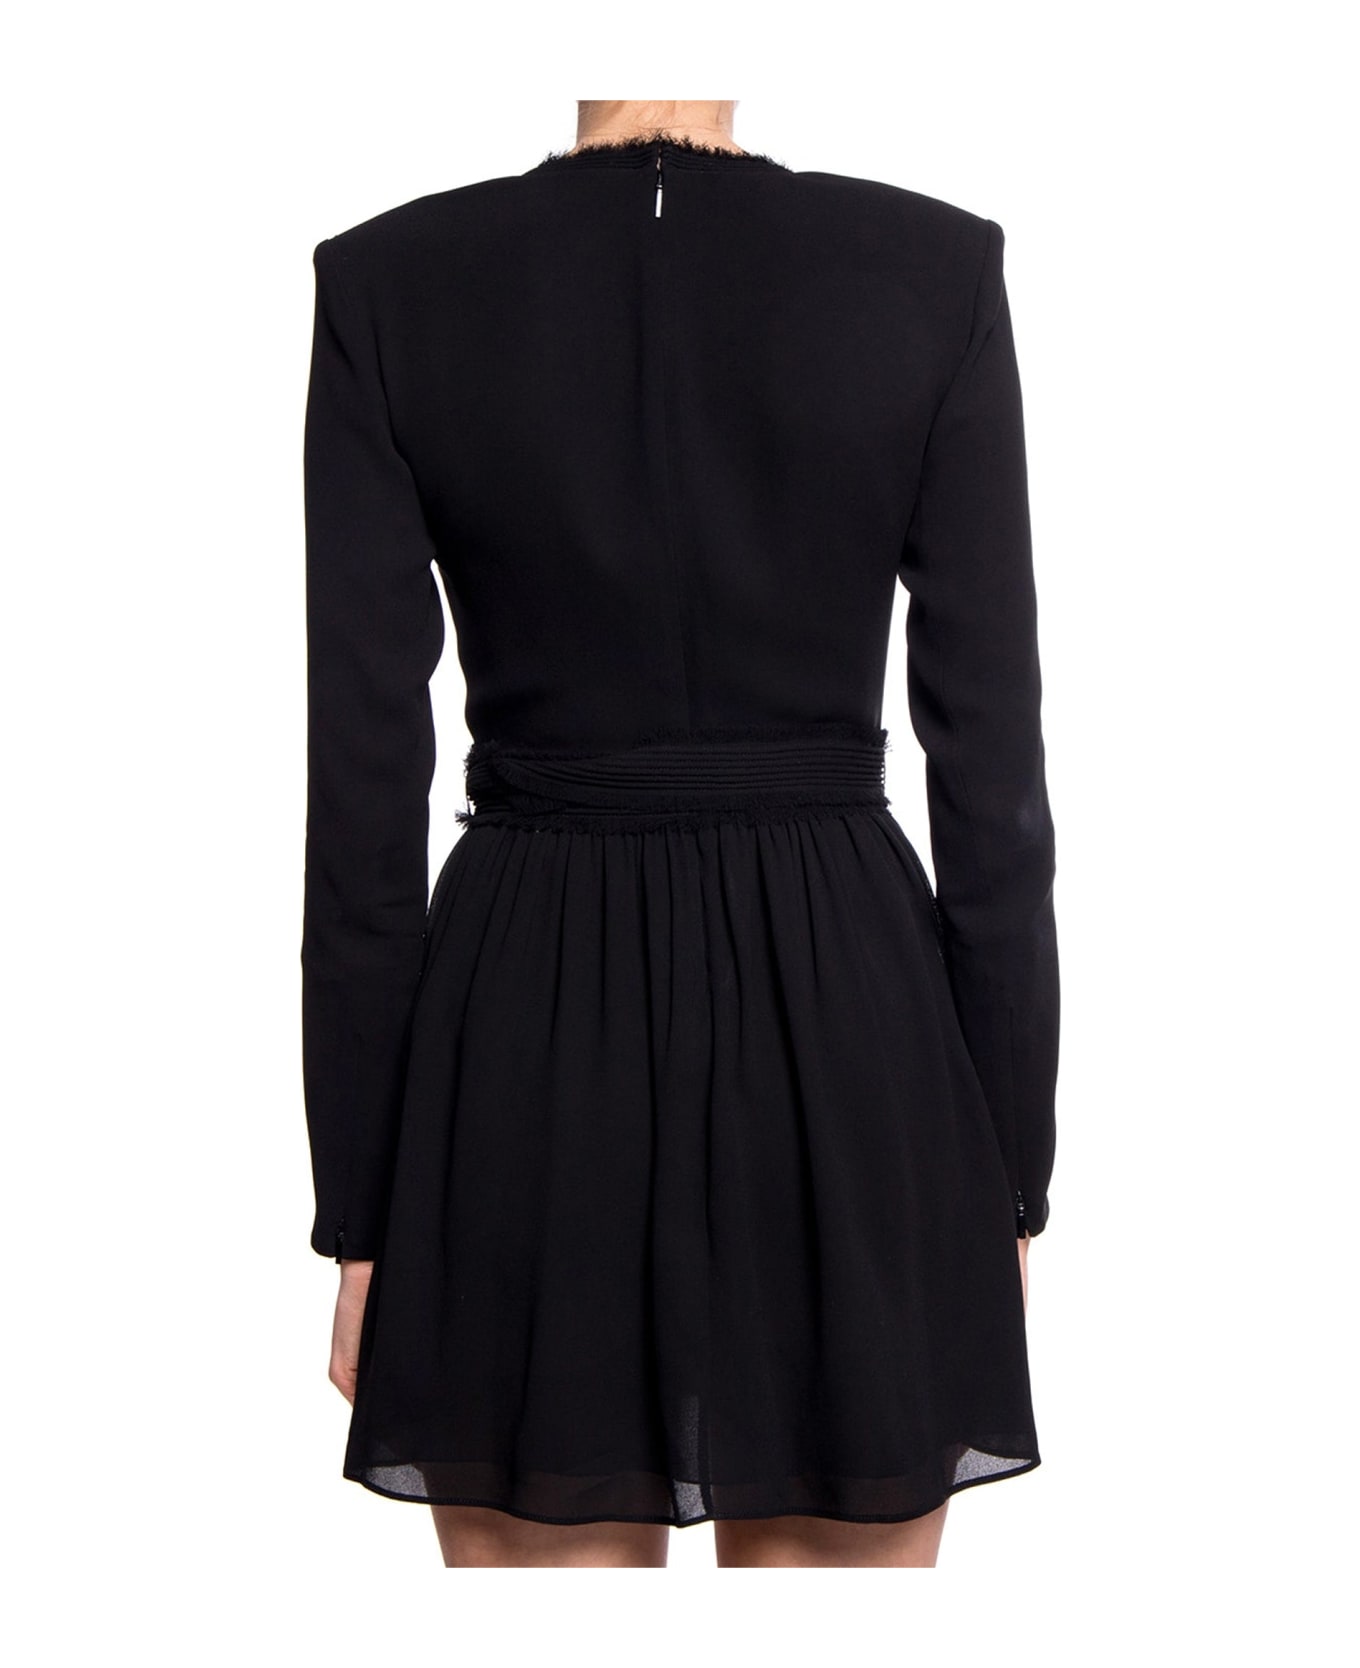 Saint Laurent Long Sleeves Dress - Black